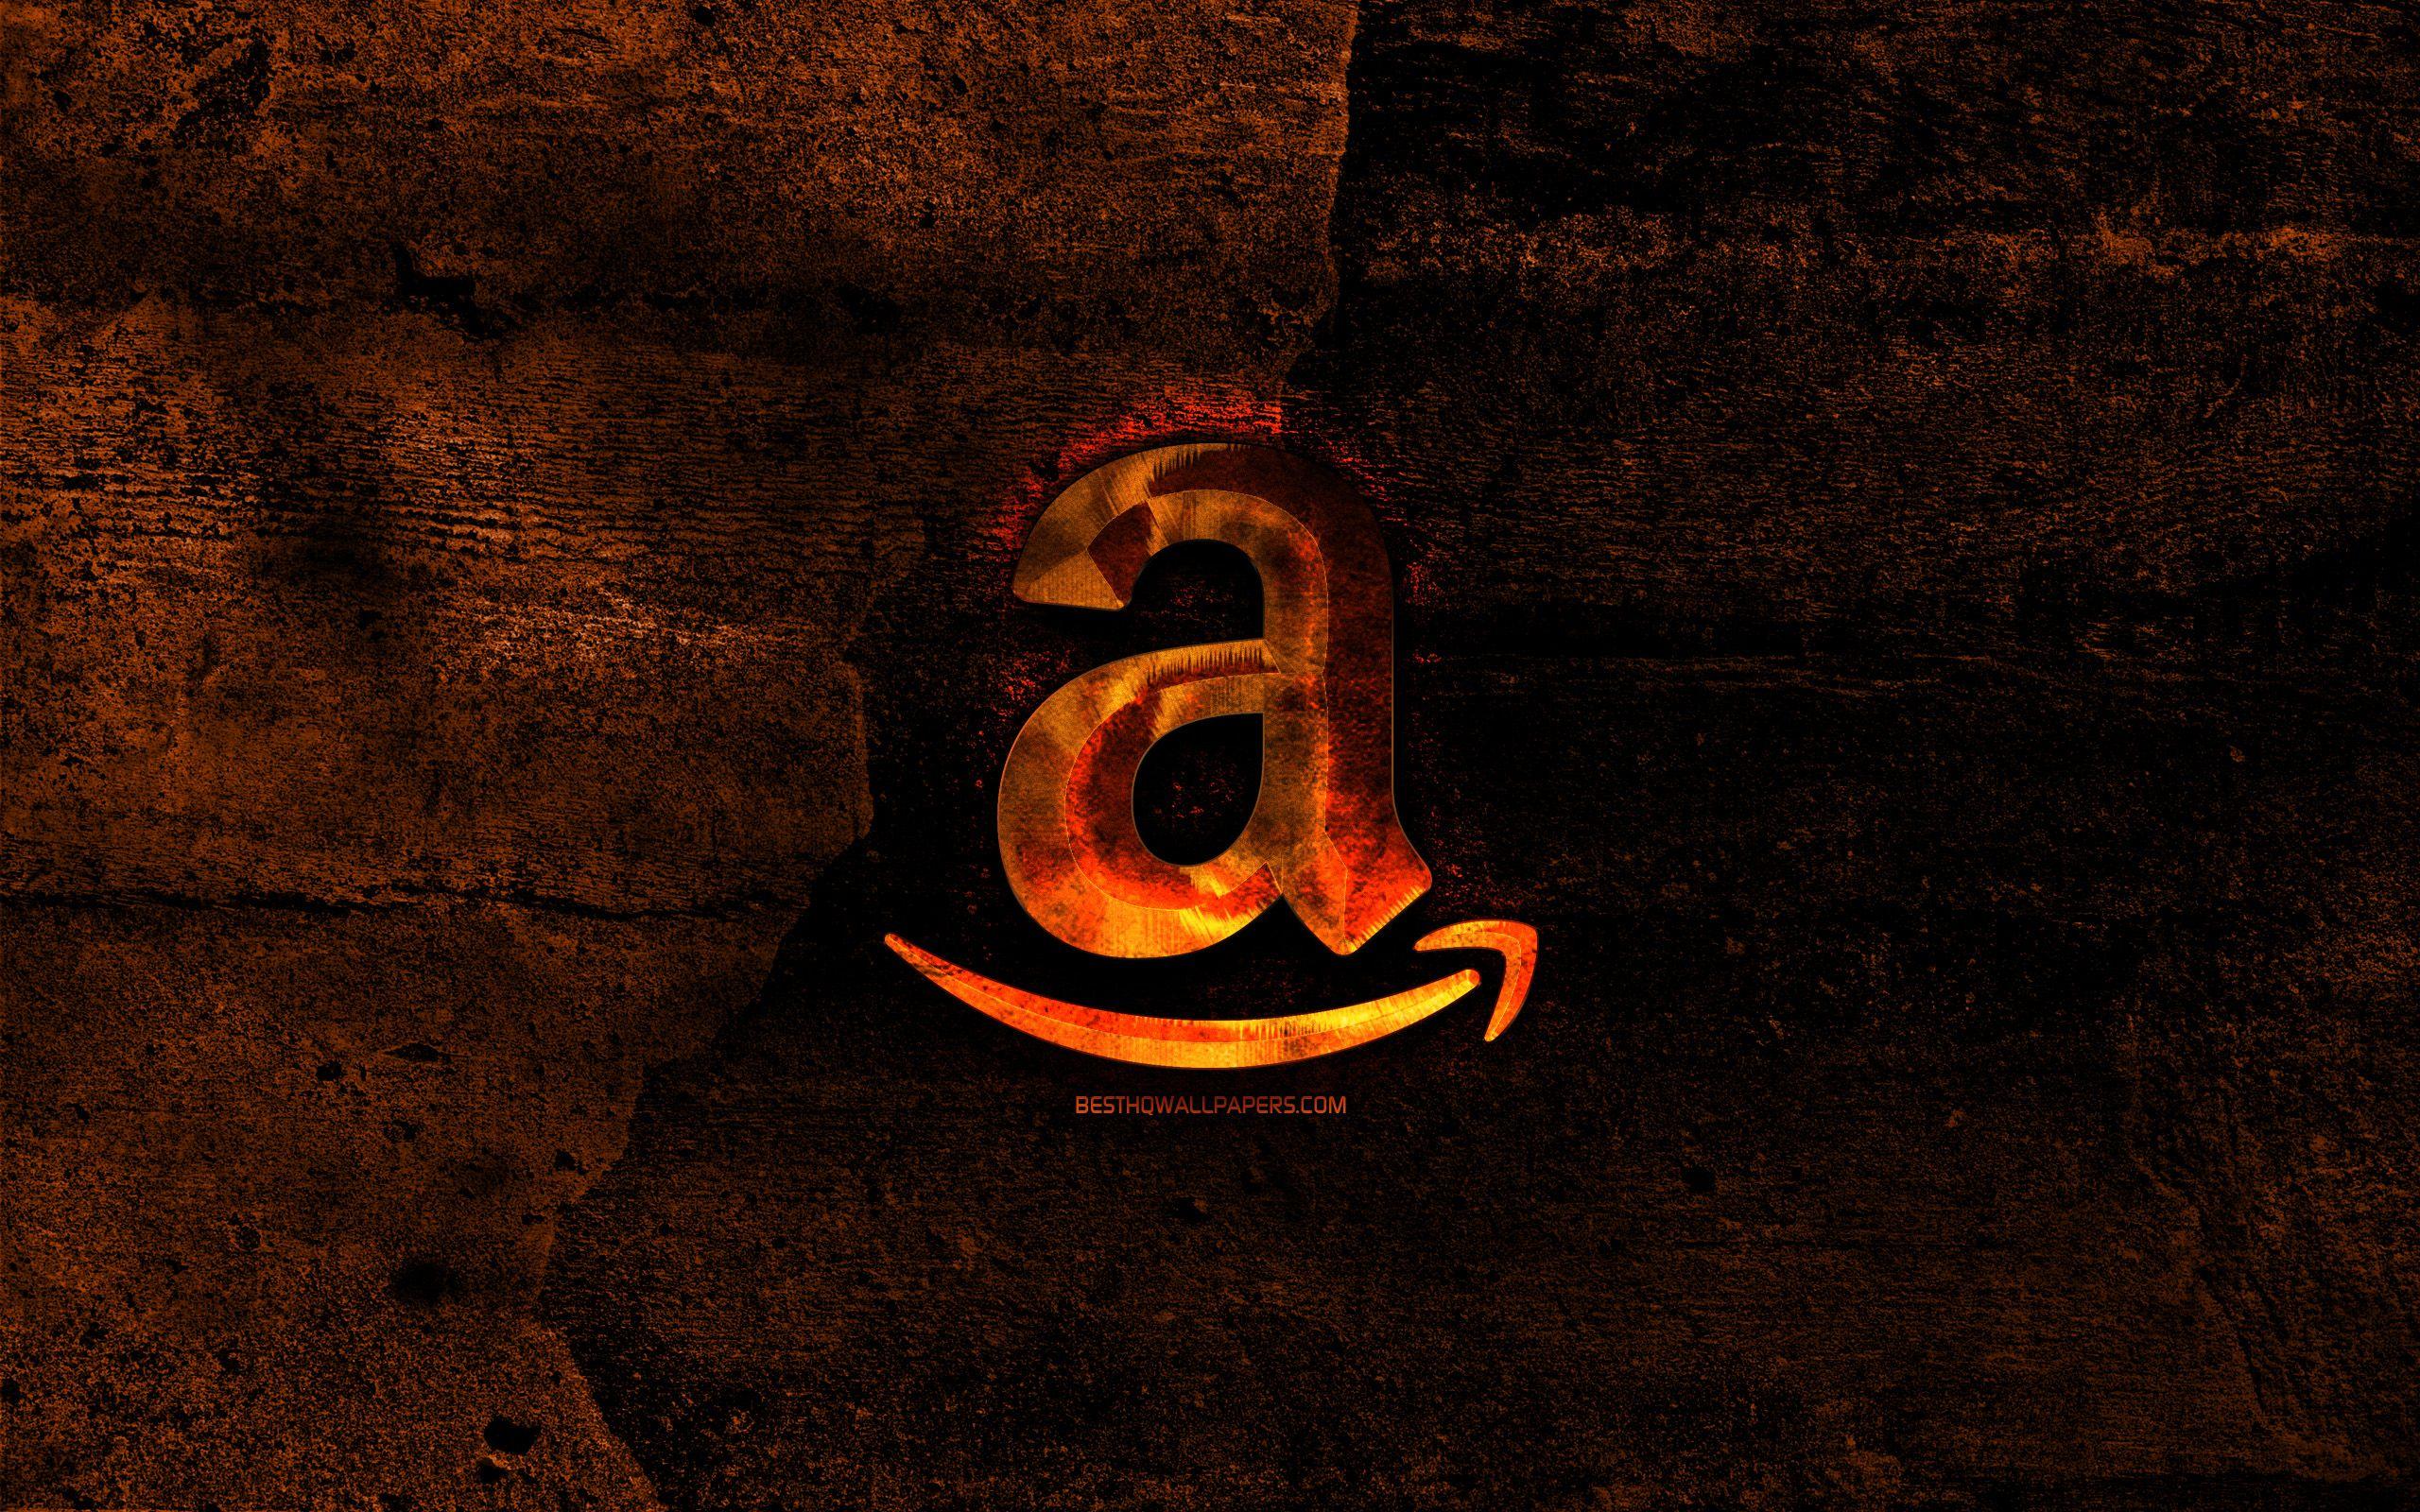 Amazon Logo Wallpapers - Top Free Amazon Logo Backgrounds - WallpaperAccess